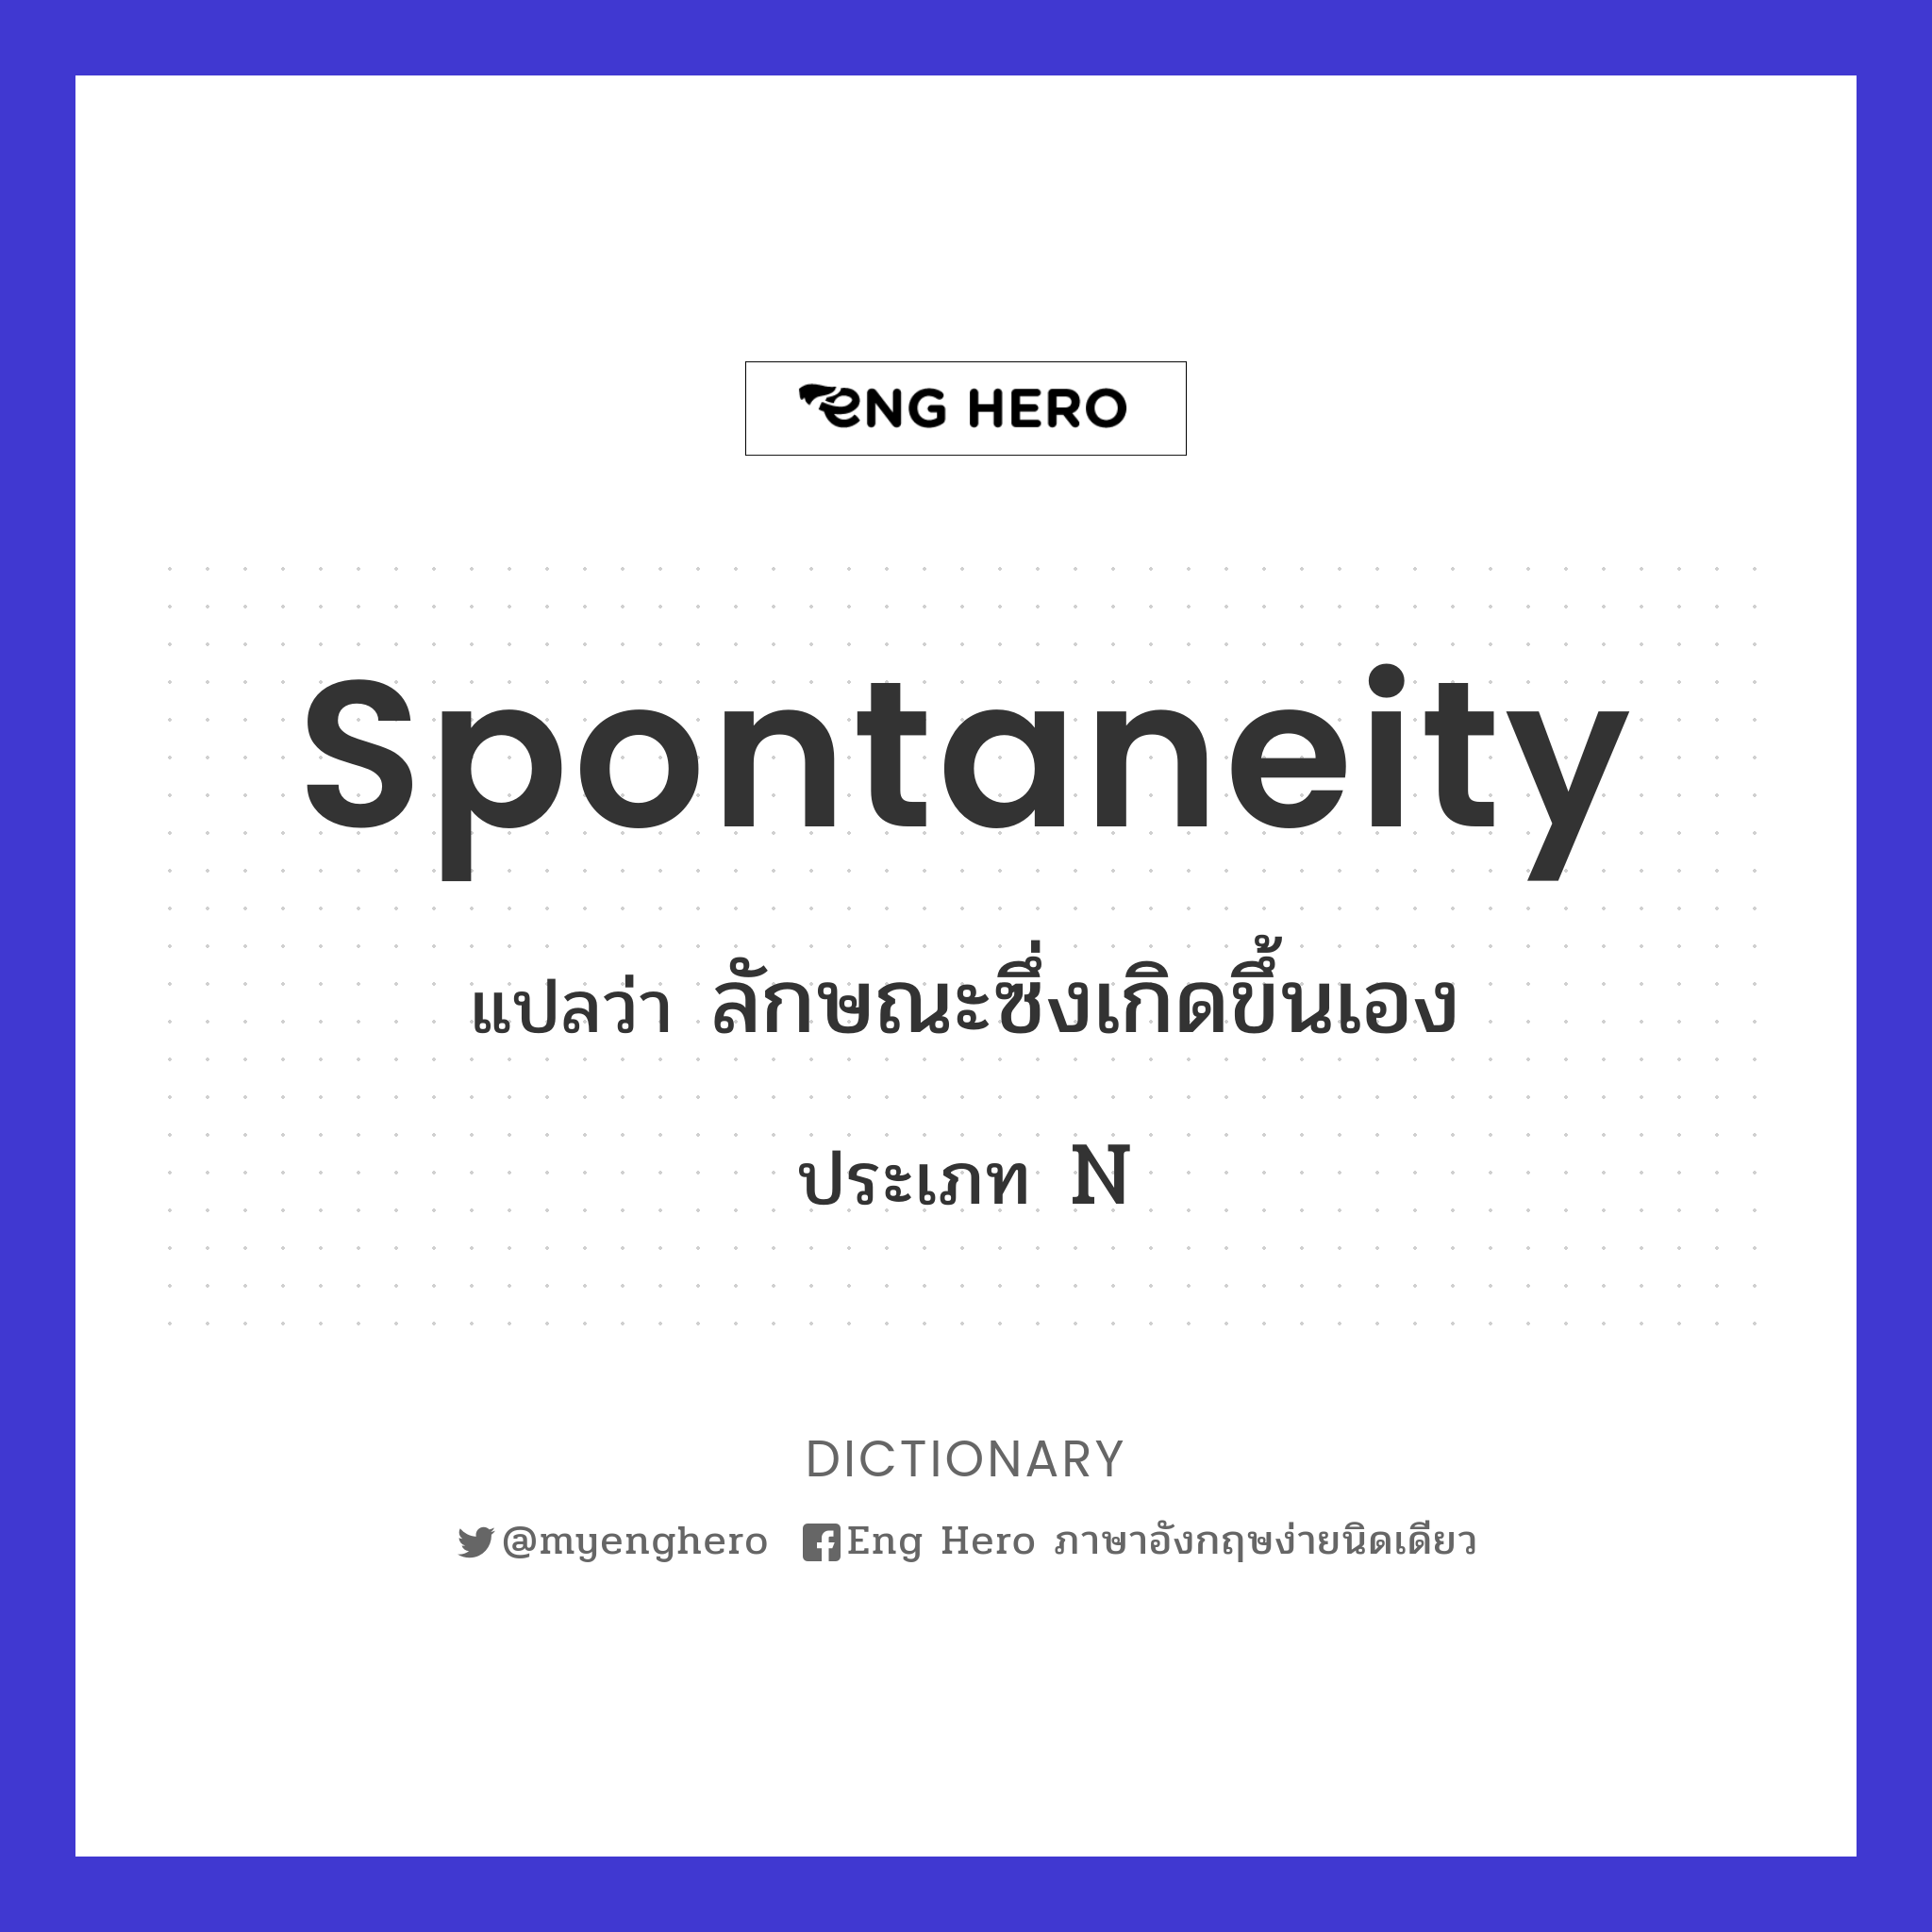 spontaneity